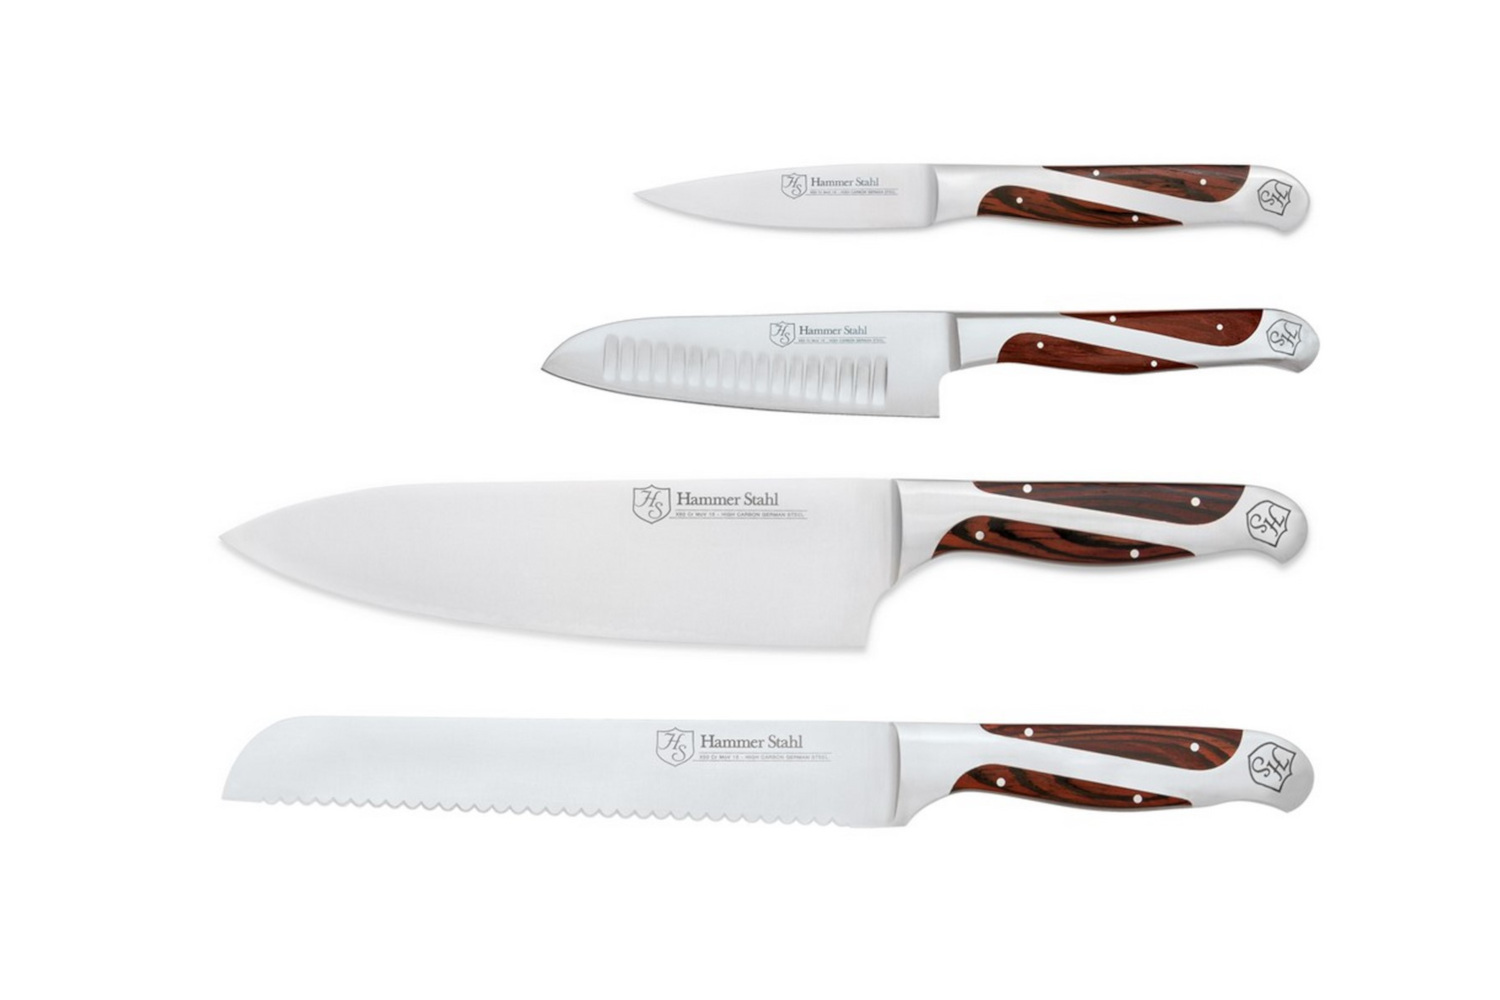  Hammer Stahl Steak Knives Set Of 4, High Carbon German Steel  Kitchen Knife Set, Stainless Steel Knife Set With Ergonomic Quad-Tang  Pakkawood Handle